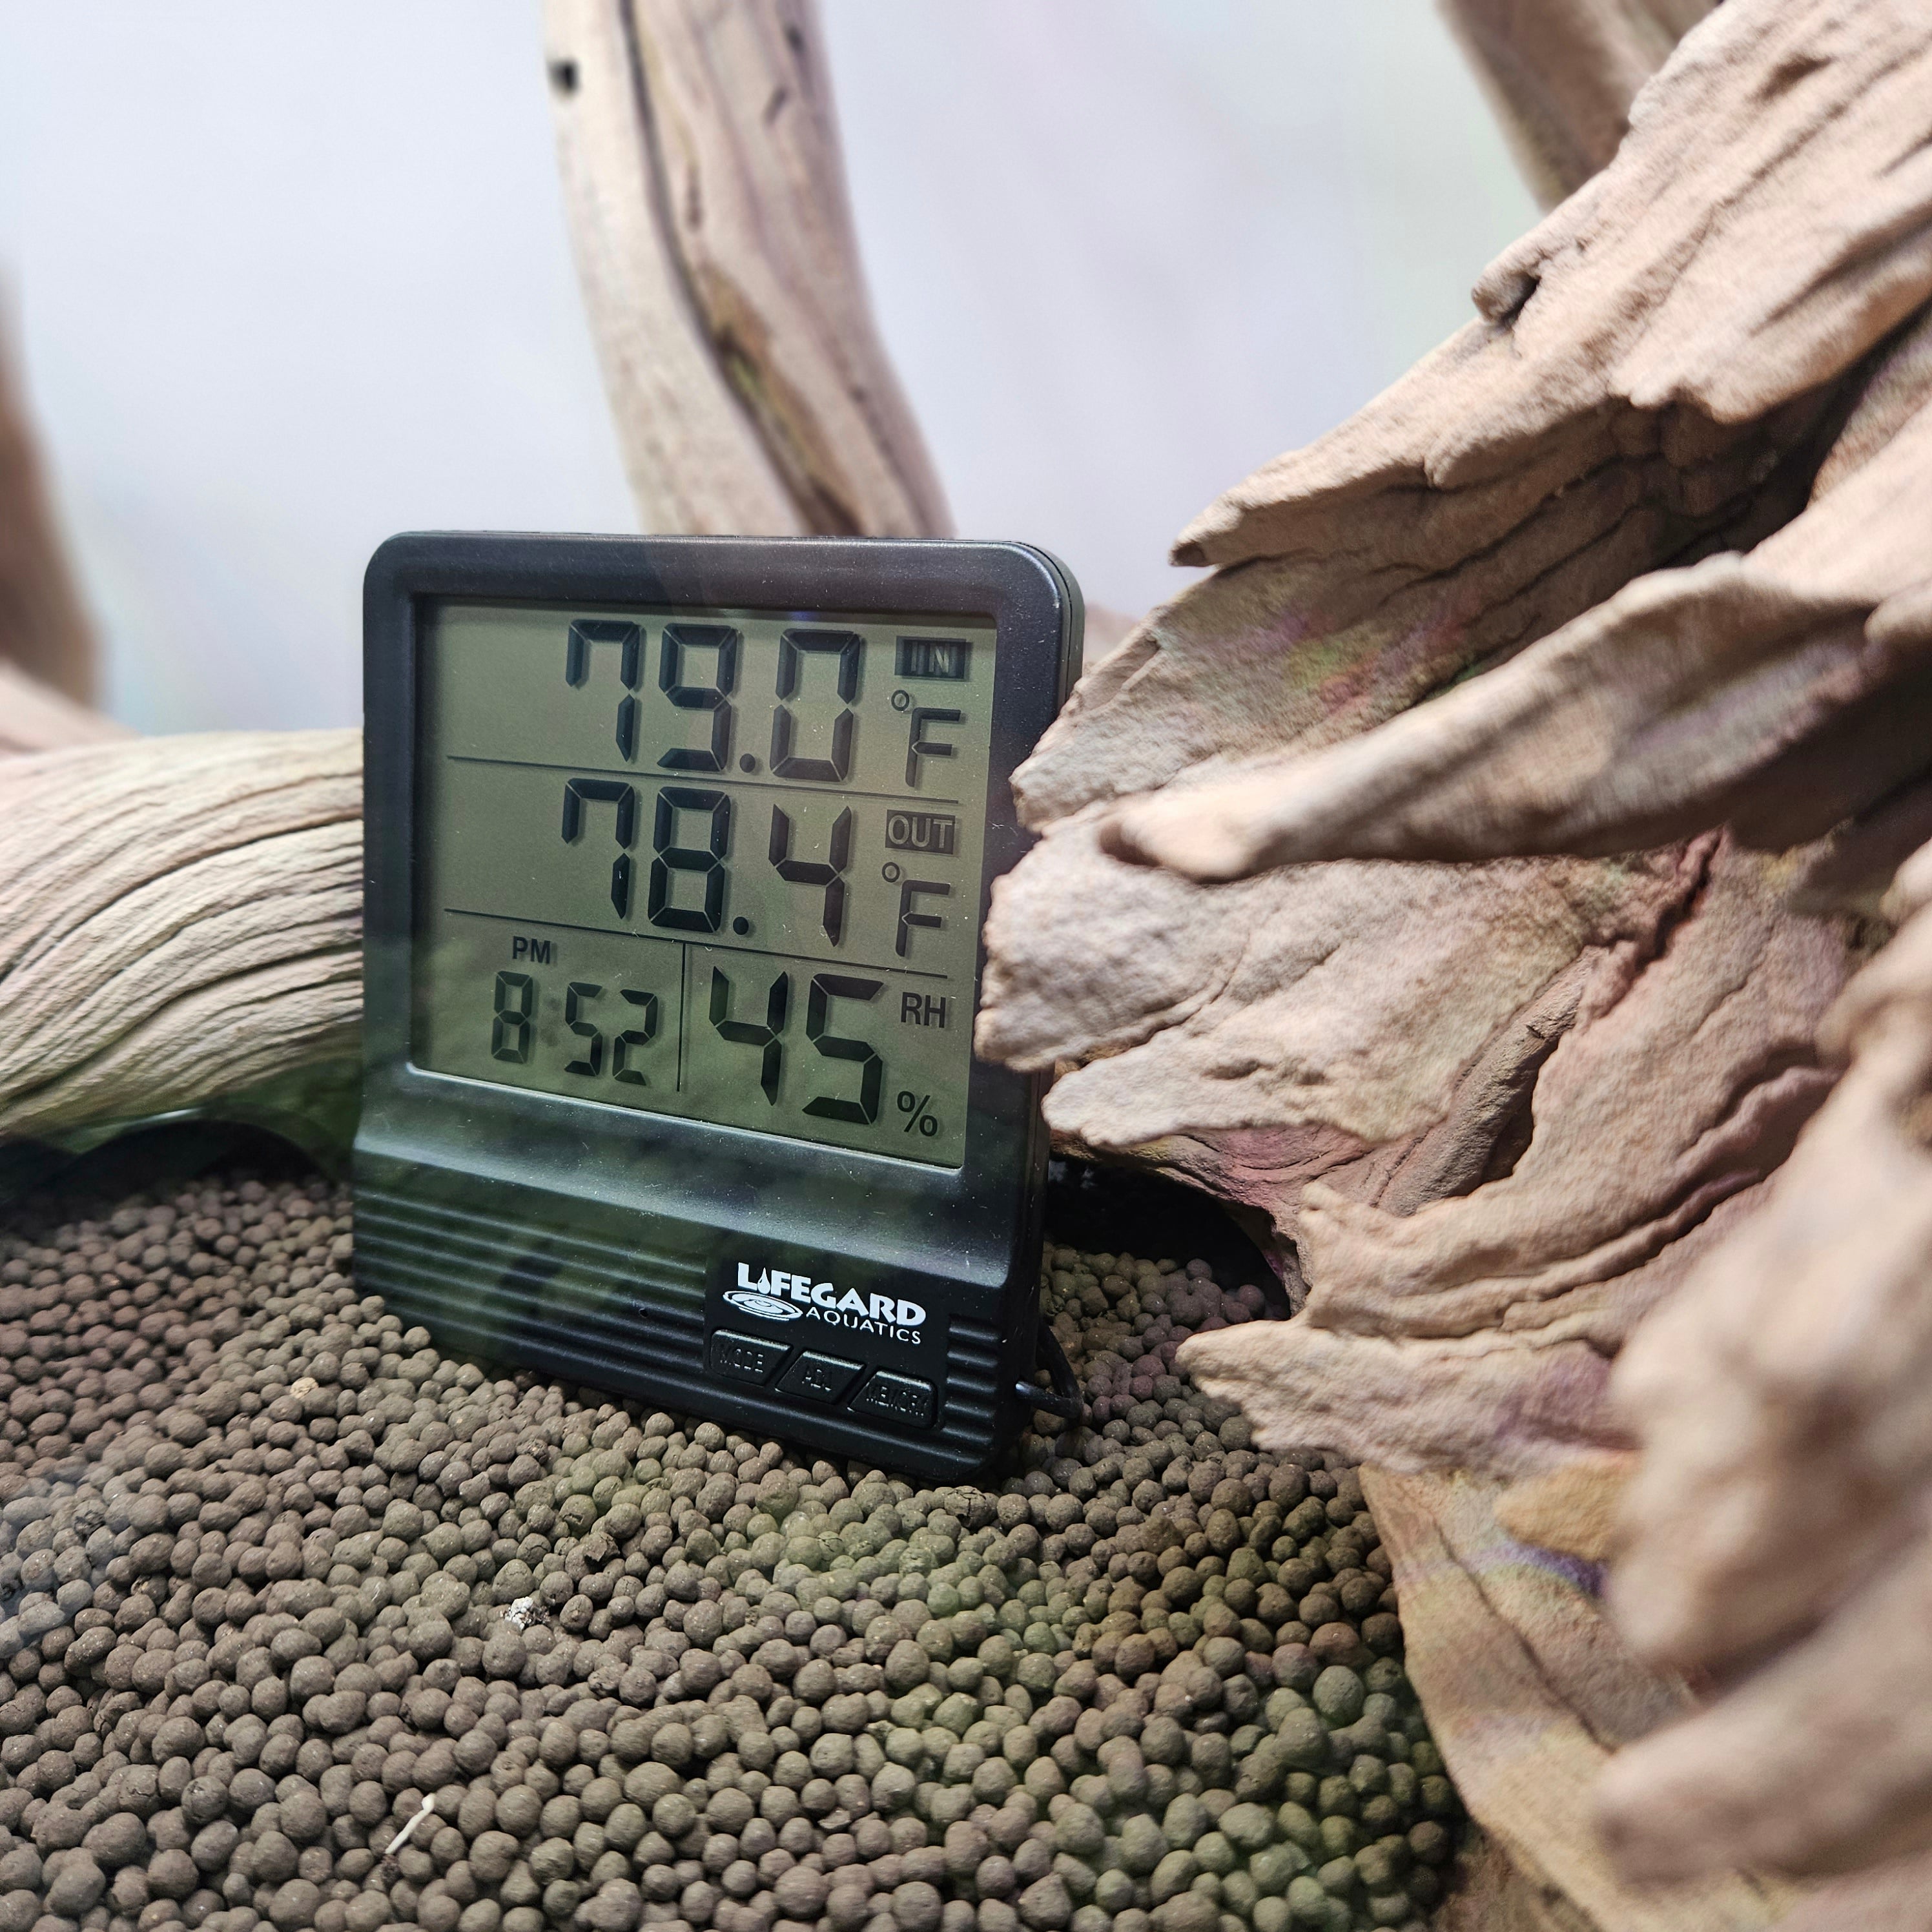 Digital Thermometer Hygrometer